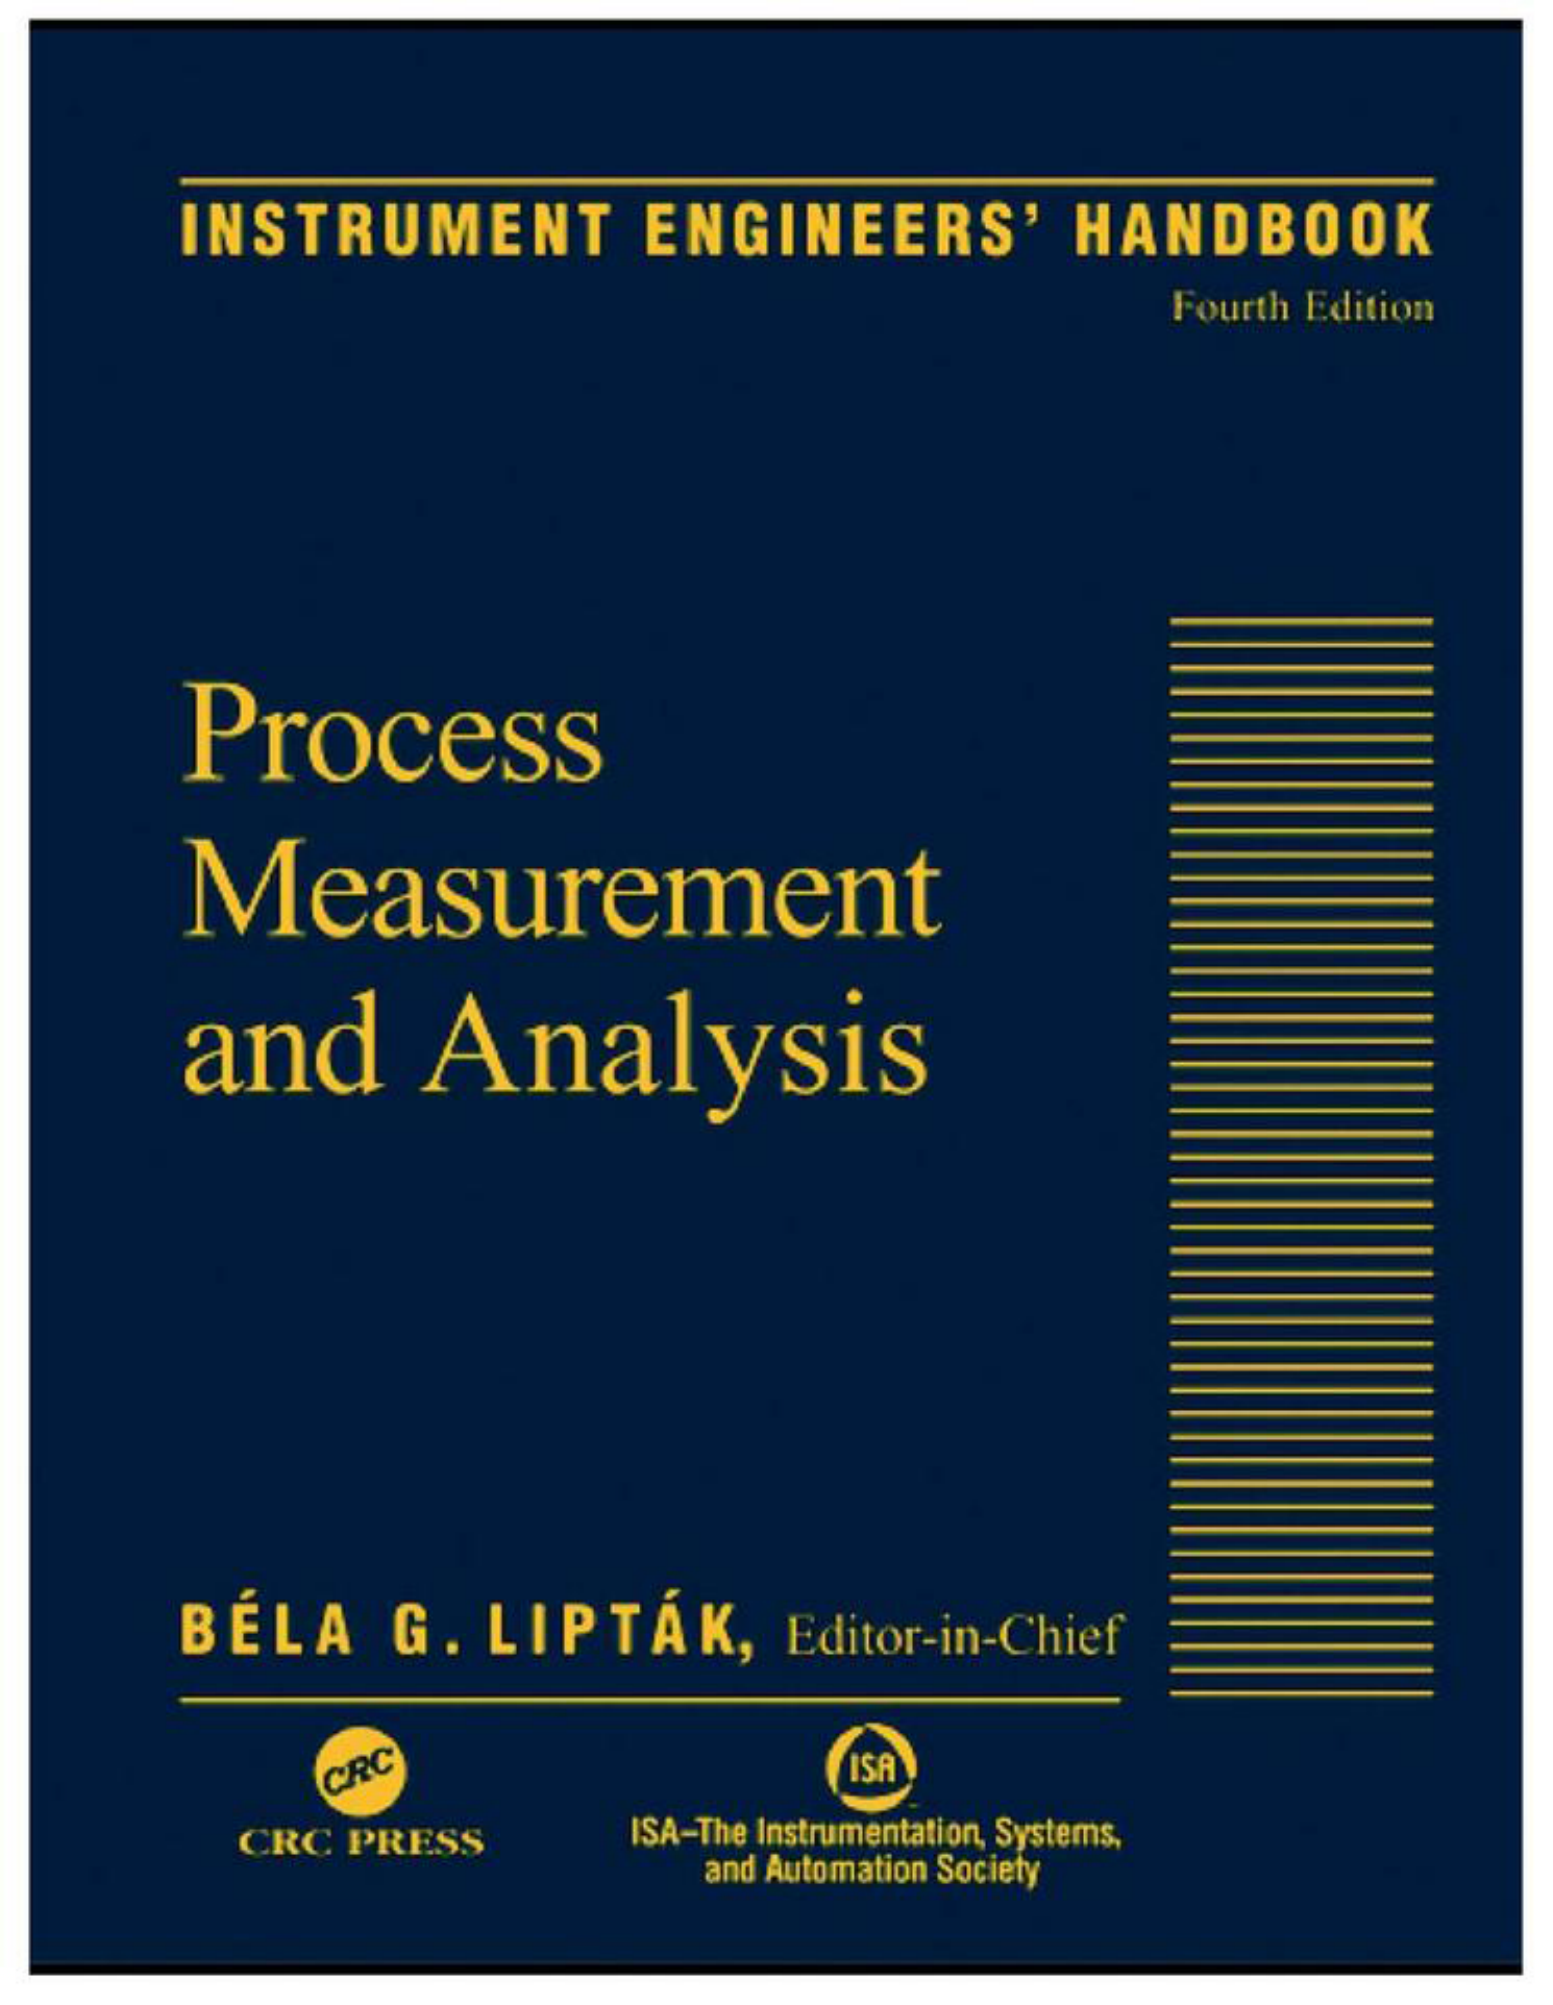 1 Instrument Engineers Handbook, Volume 1, Fourth E 870011 (z-lib.org)